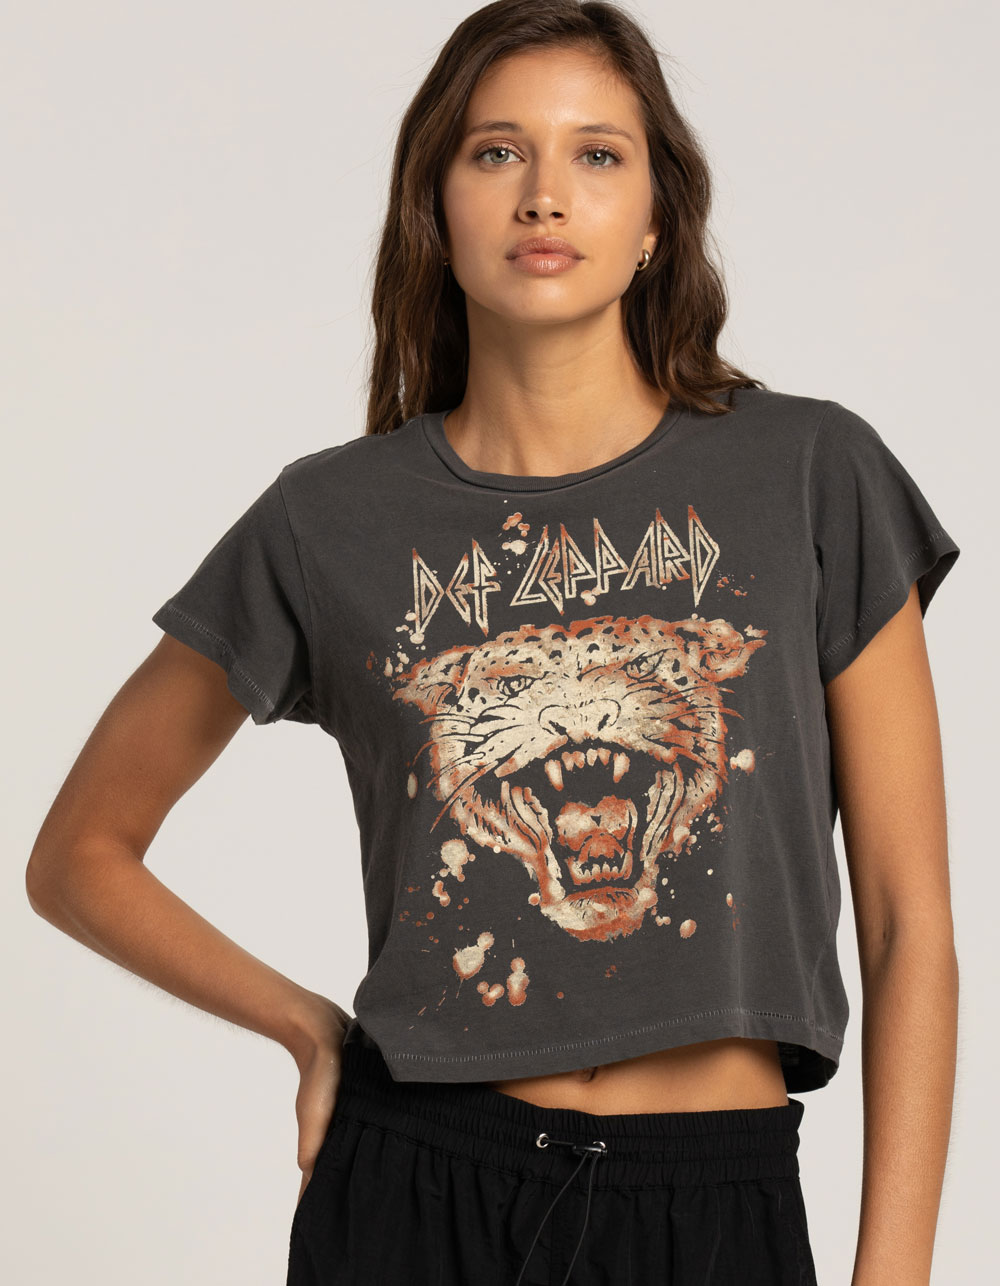 Def Leppard Graphic Tee Shirt Sweatshirt Hoodie Mens Womens